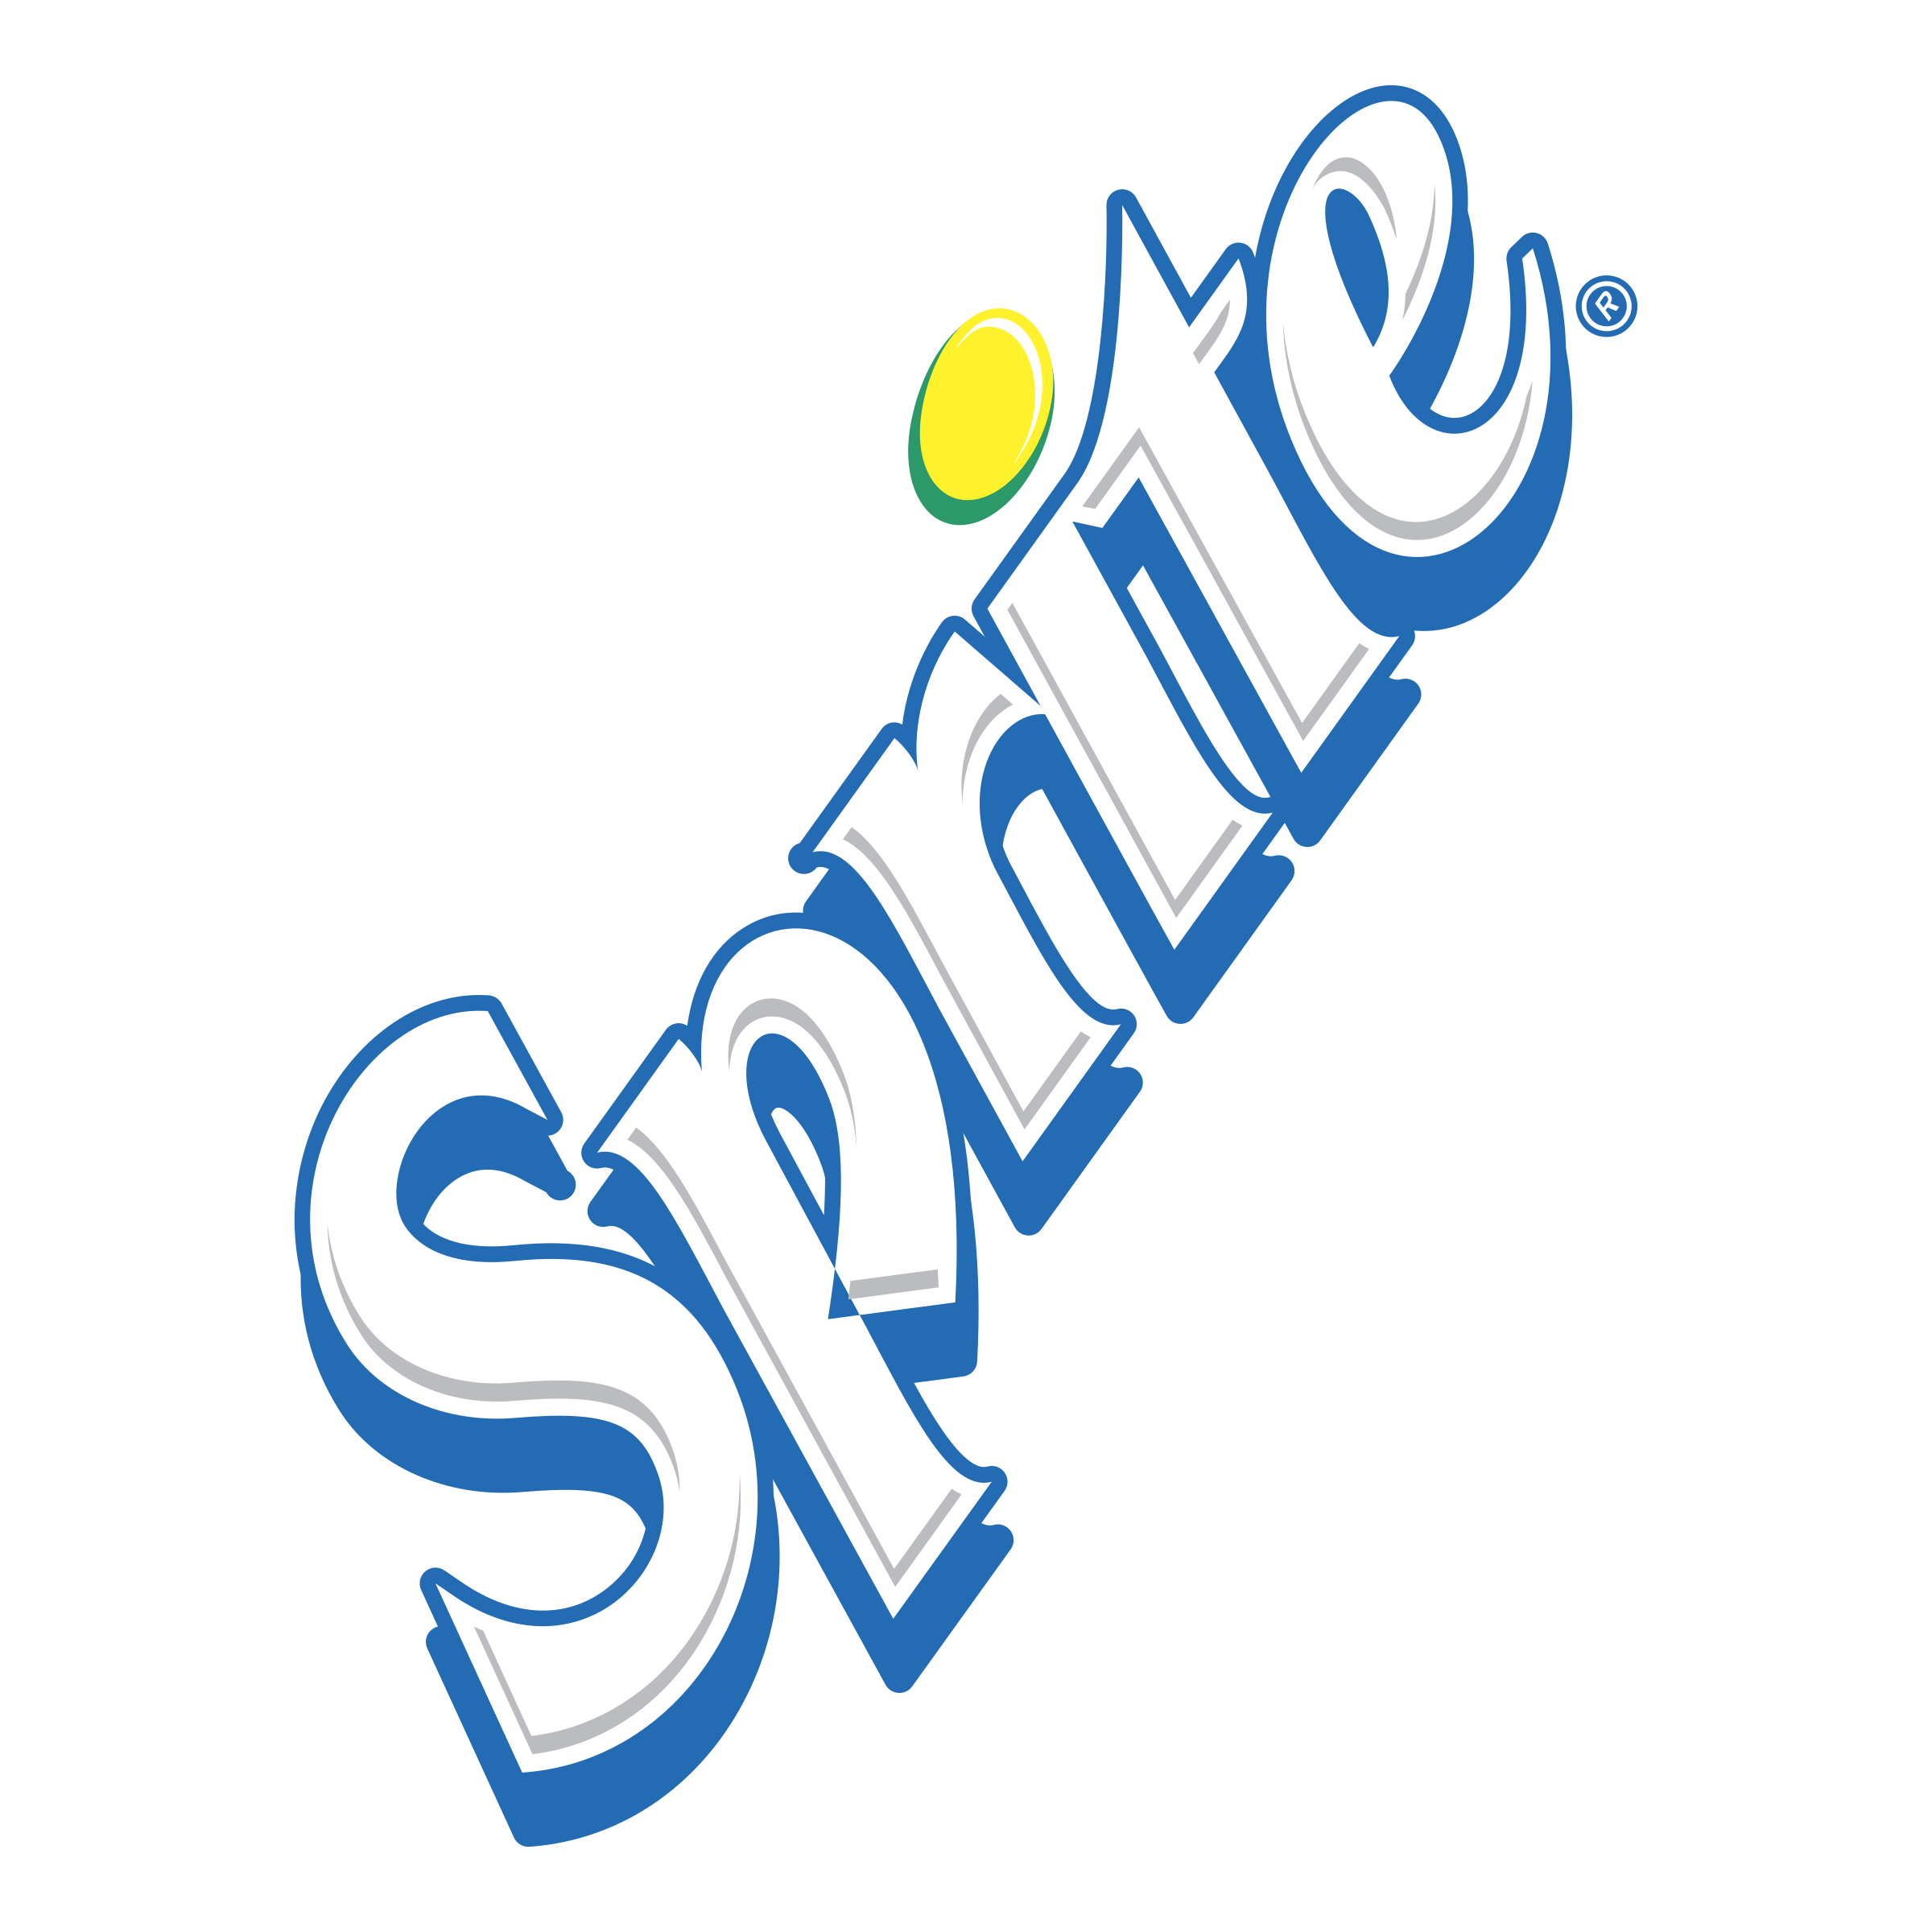 Sprite Logo PNG Photo